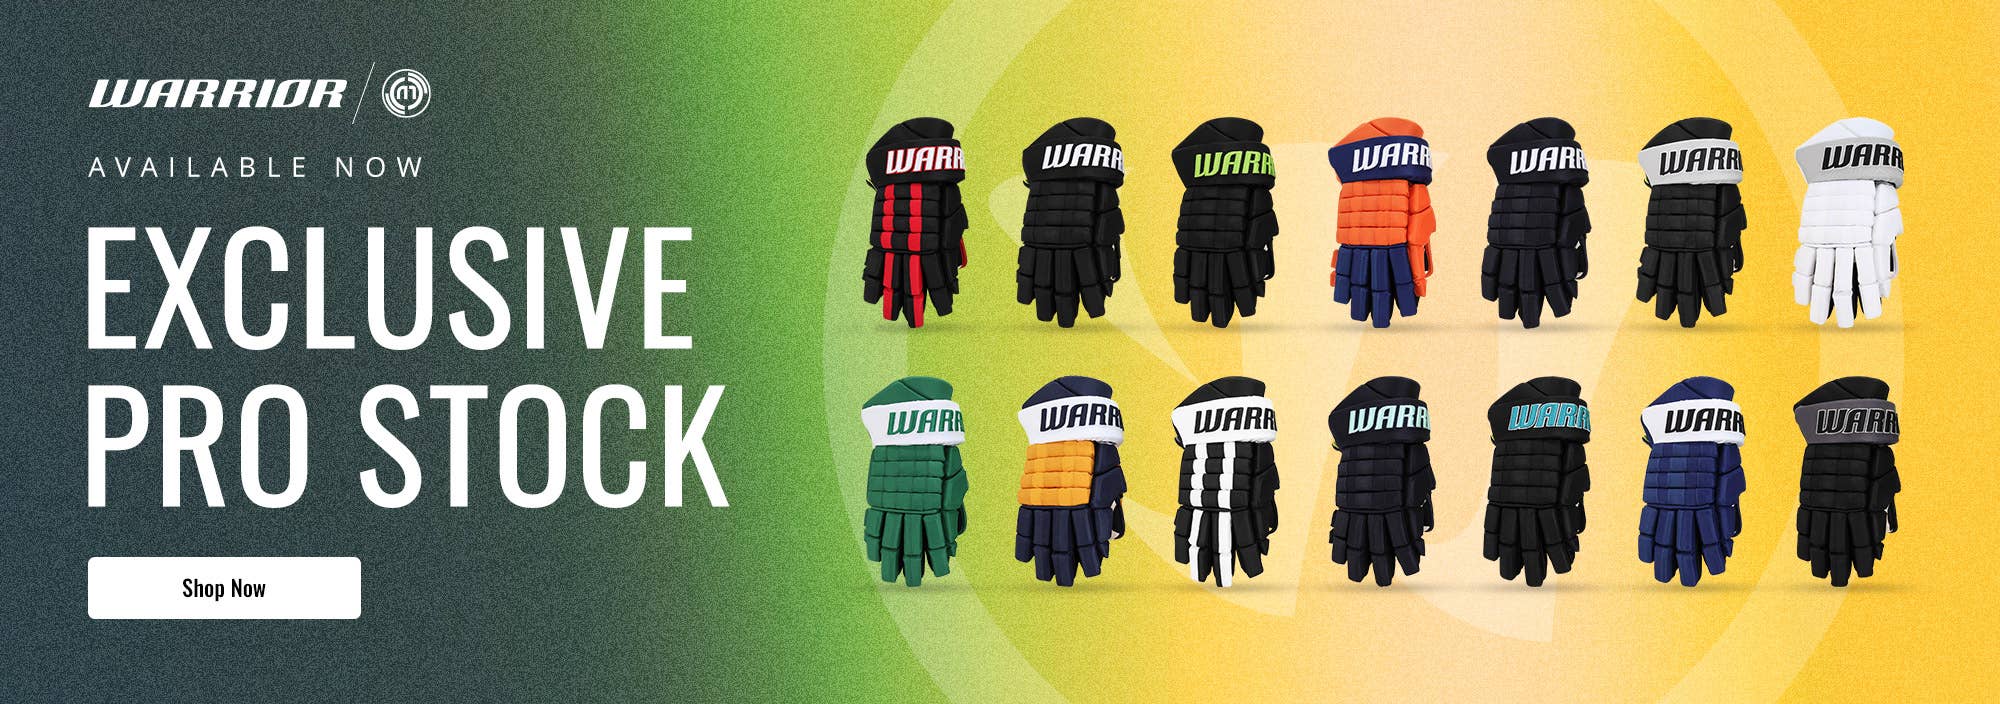 Warrior Alpha Classic NHL Pro Stock Hockey Gloves